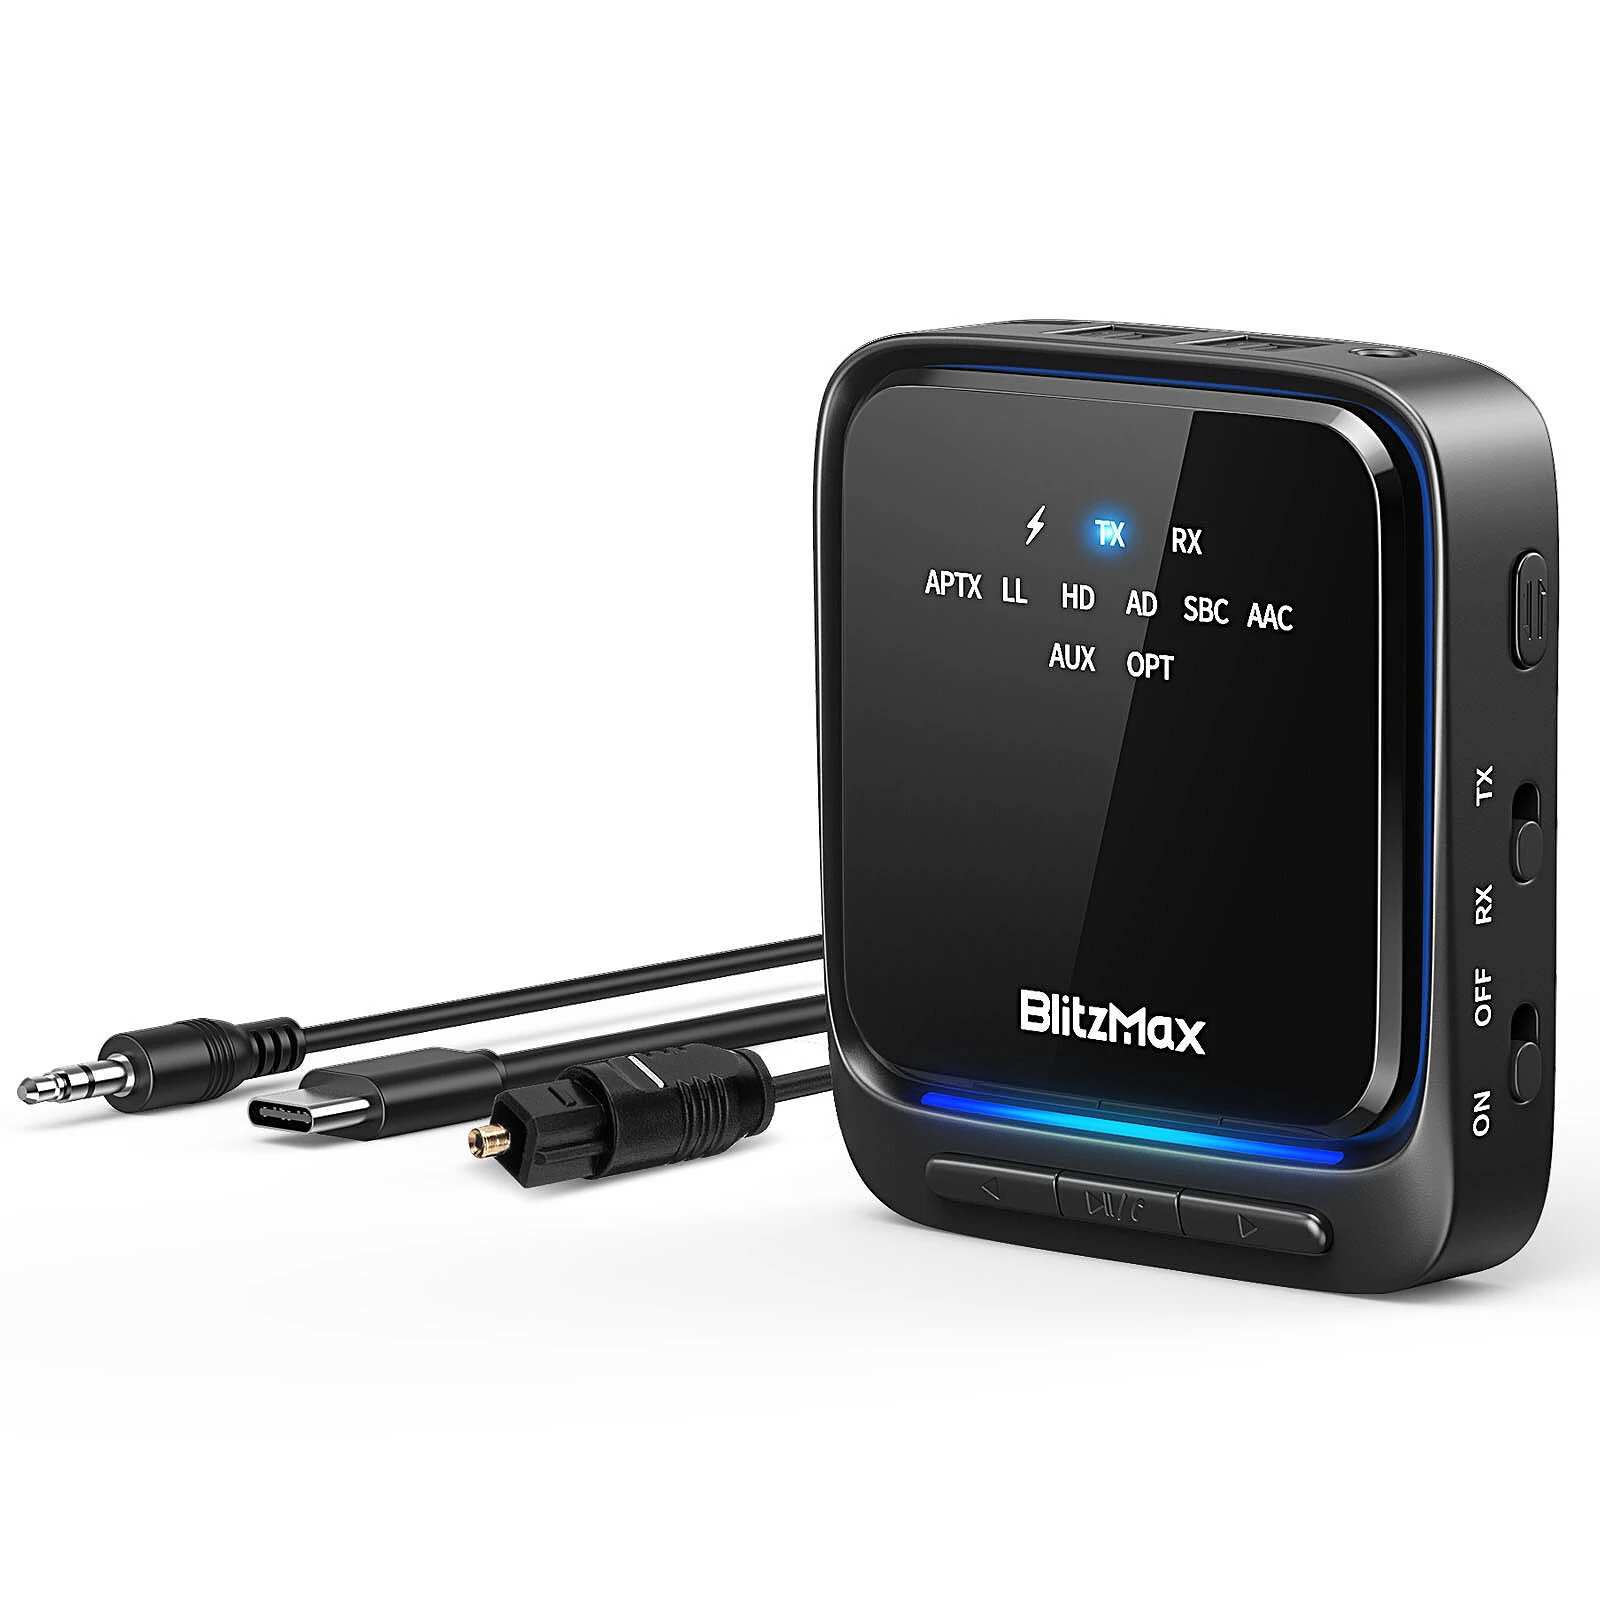 BlitzMax BT06 Transmitter Receiver bluetooth Banggood Coupon Promo Code [USA,UK,CN warehouse]